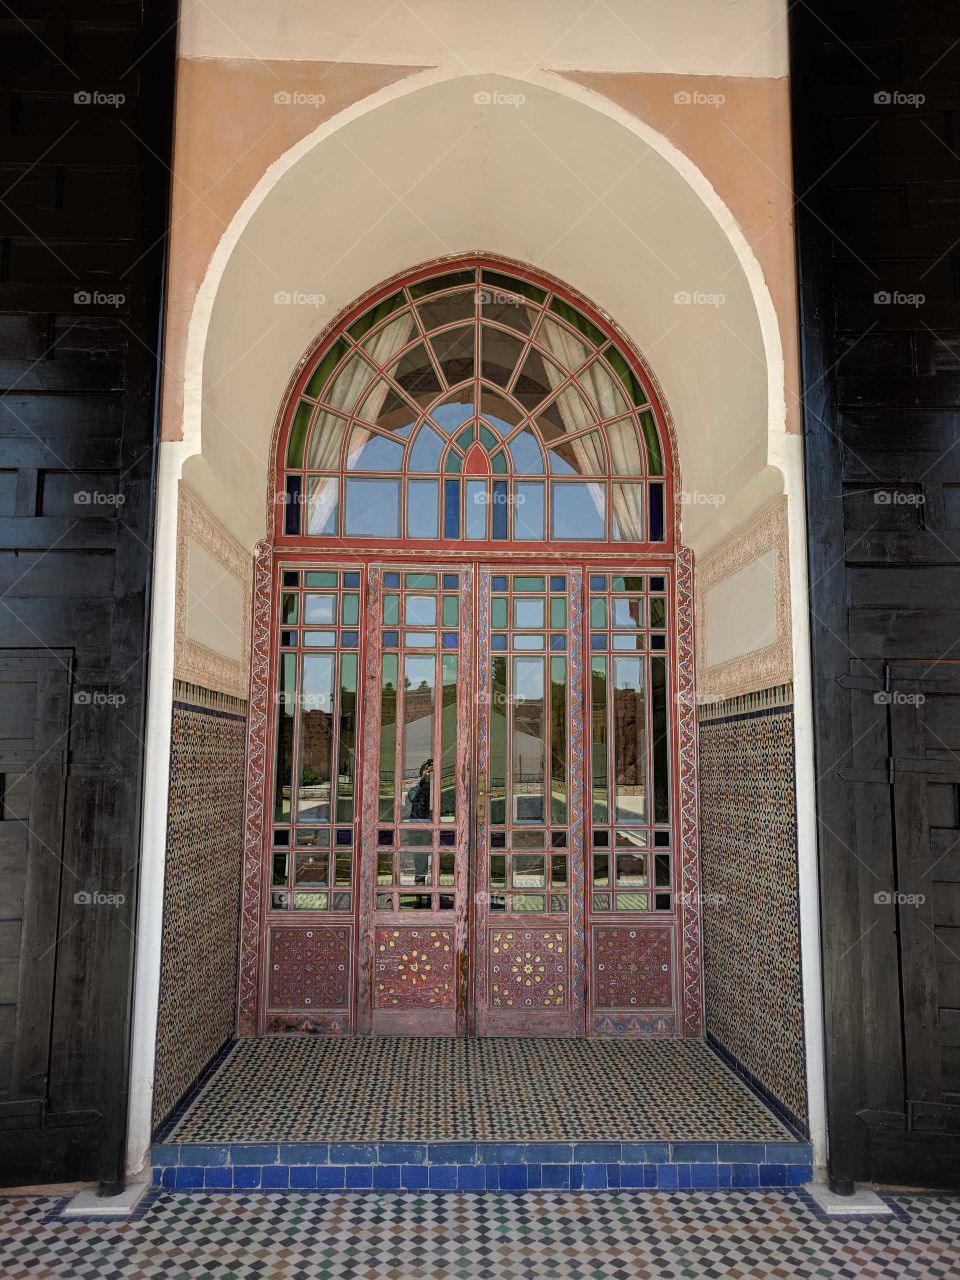 Glass Door and Mosaic Floor at Palais El Badi in Morocco